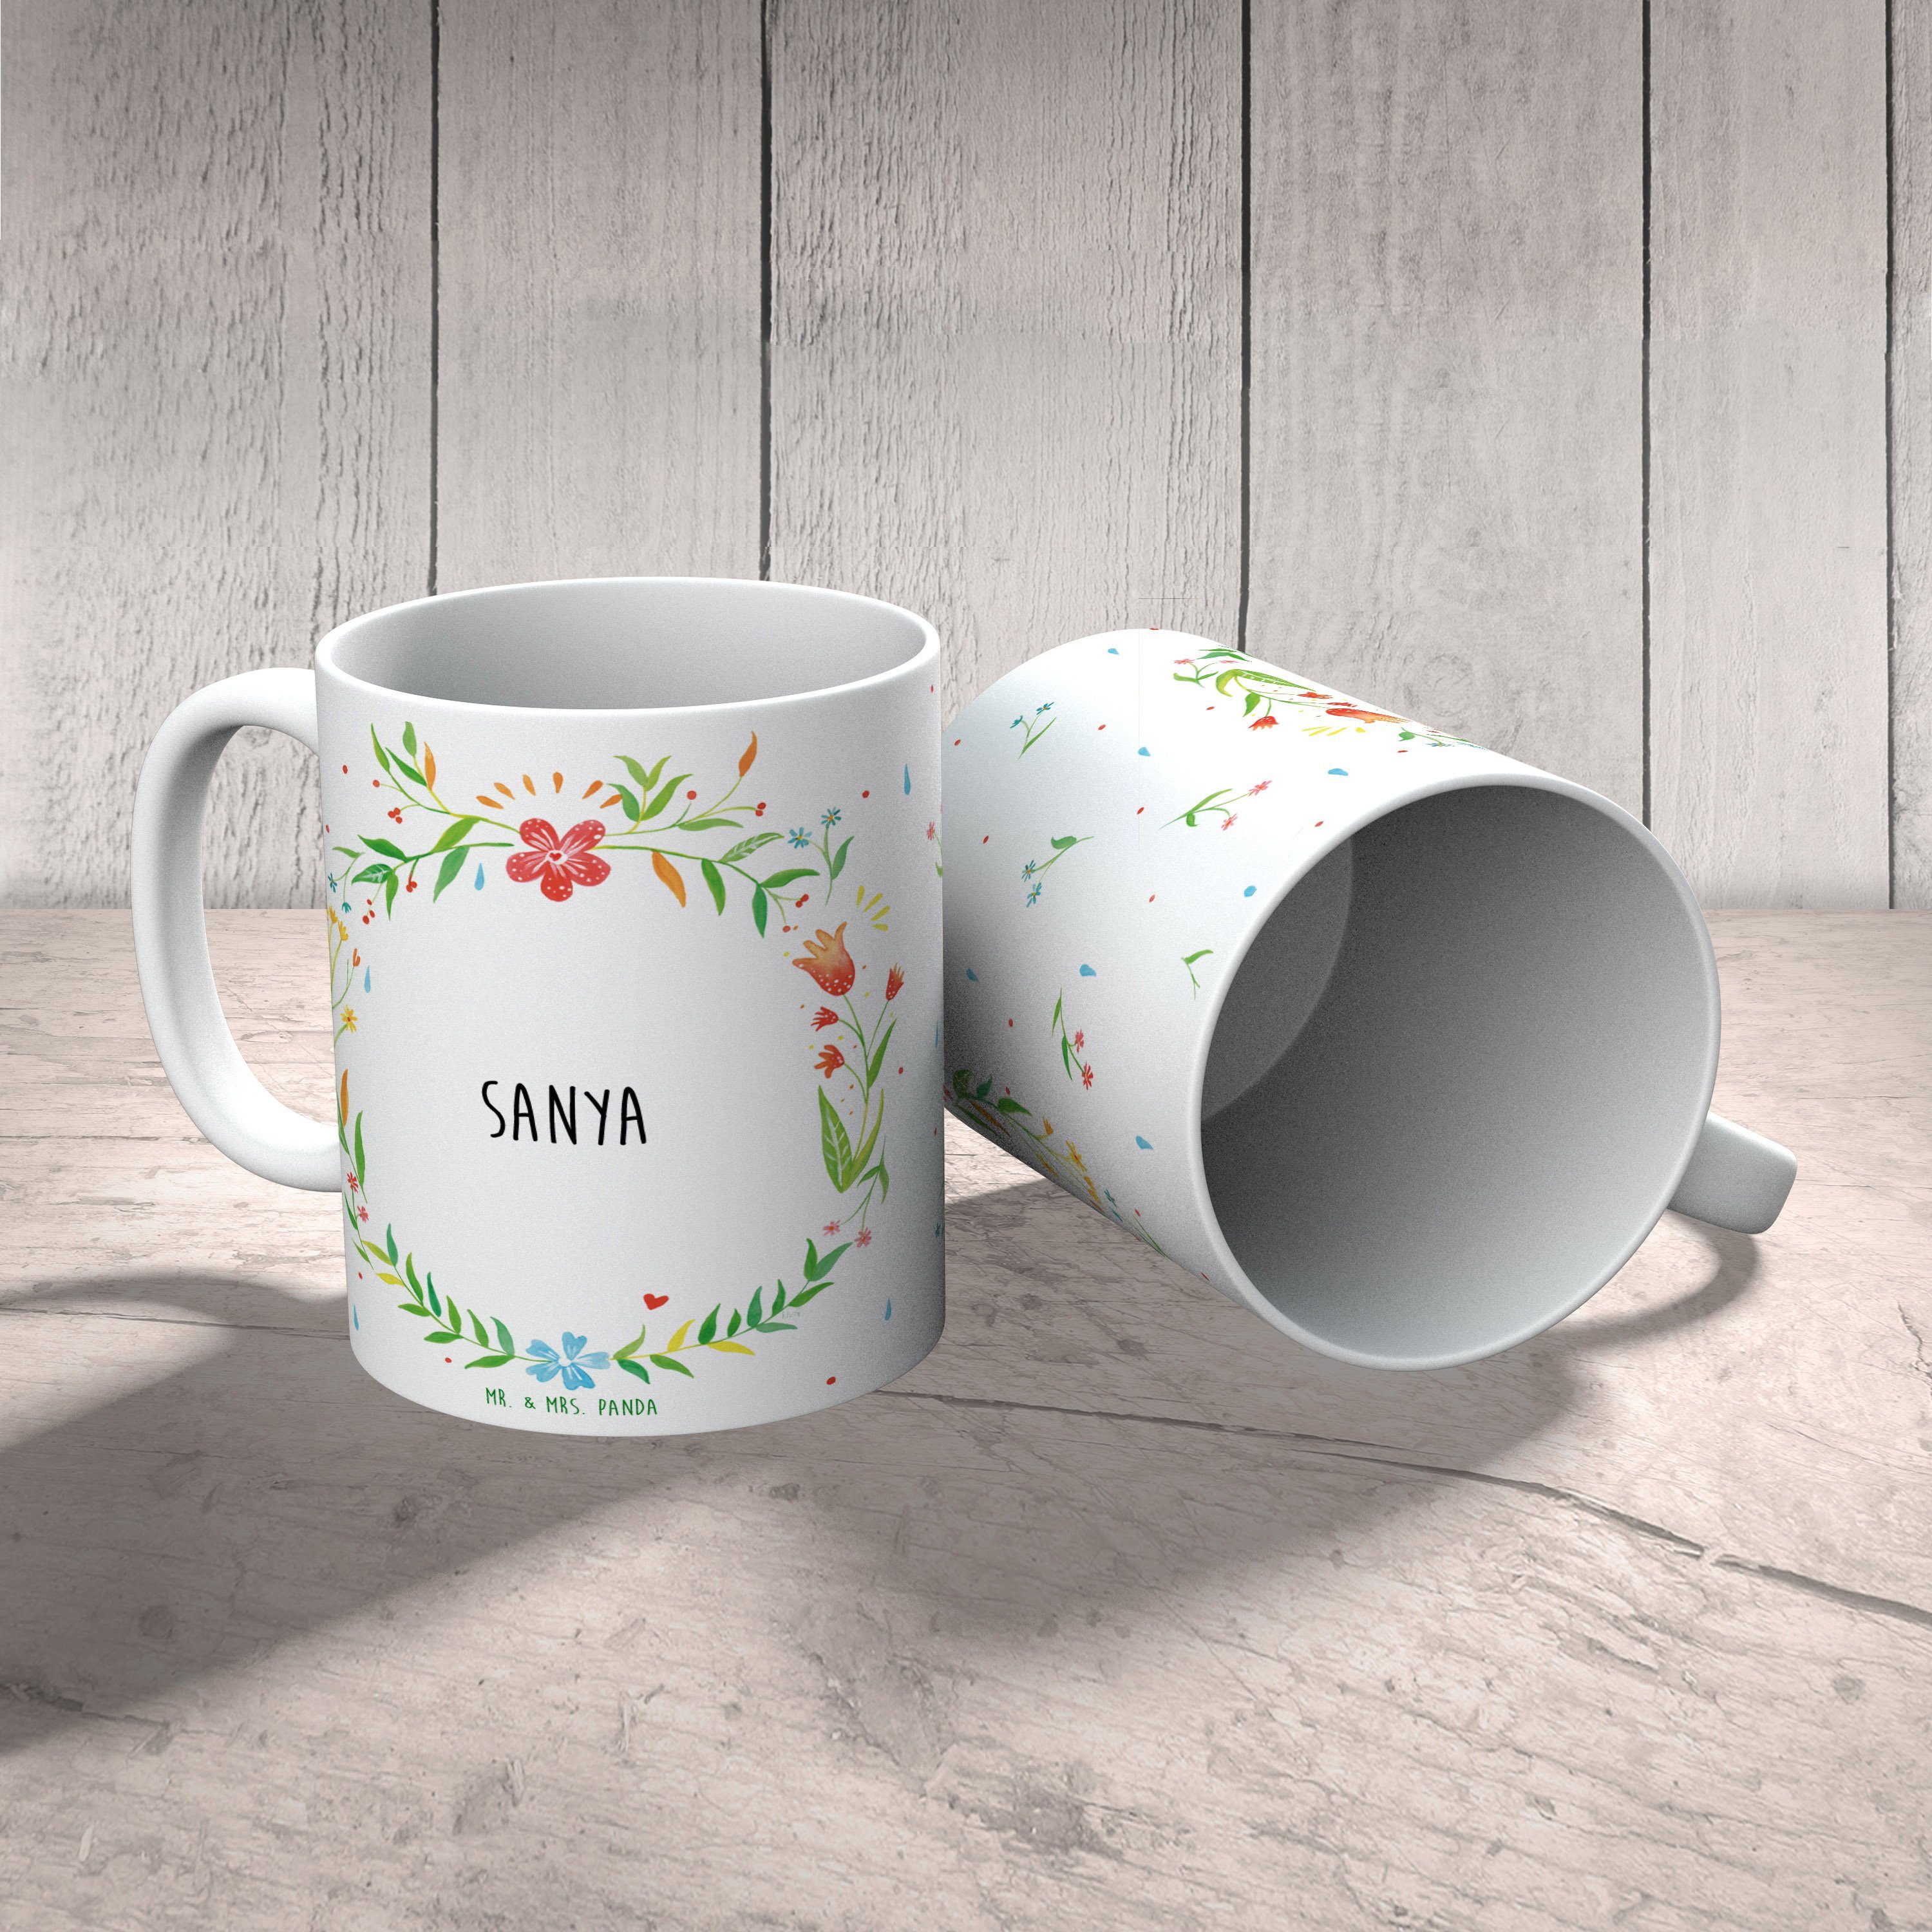 Mr. & Mrs. Panda - Keramik, Sanya Büro Tasse, Tasse, Geschenk, Teebecher, Tasse Keramik Kaffeebecher